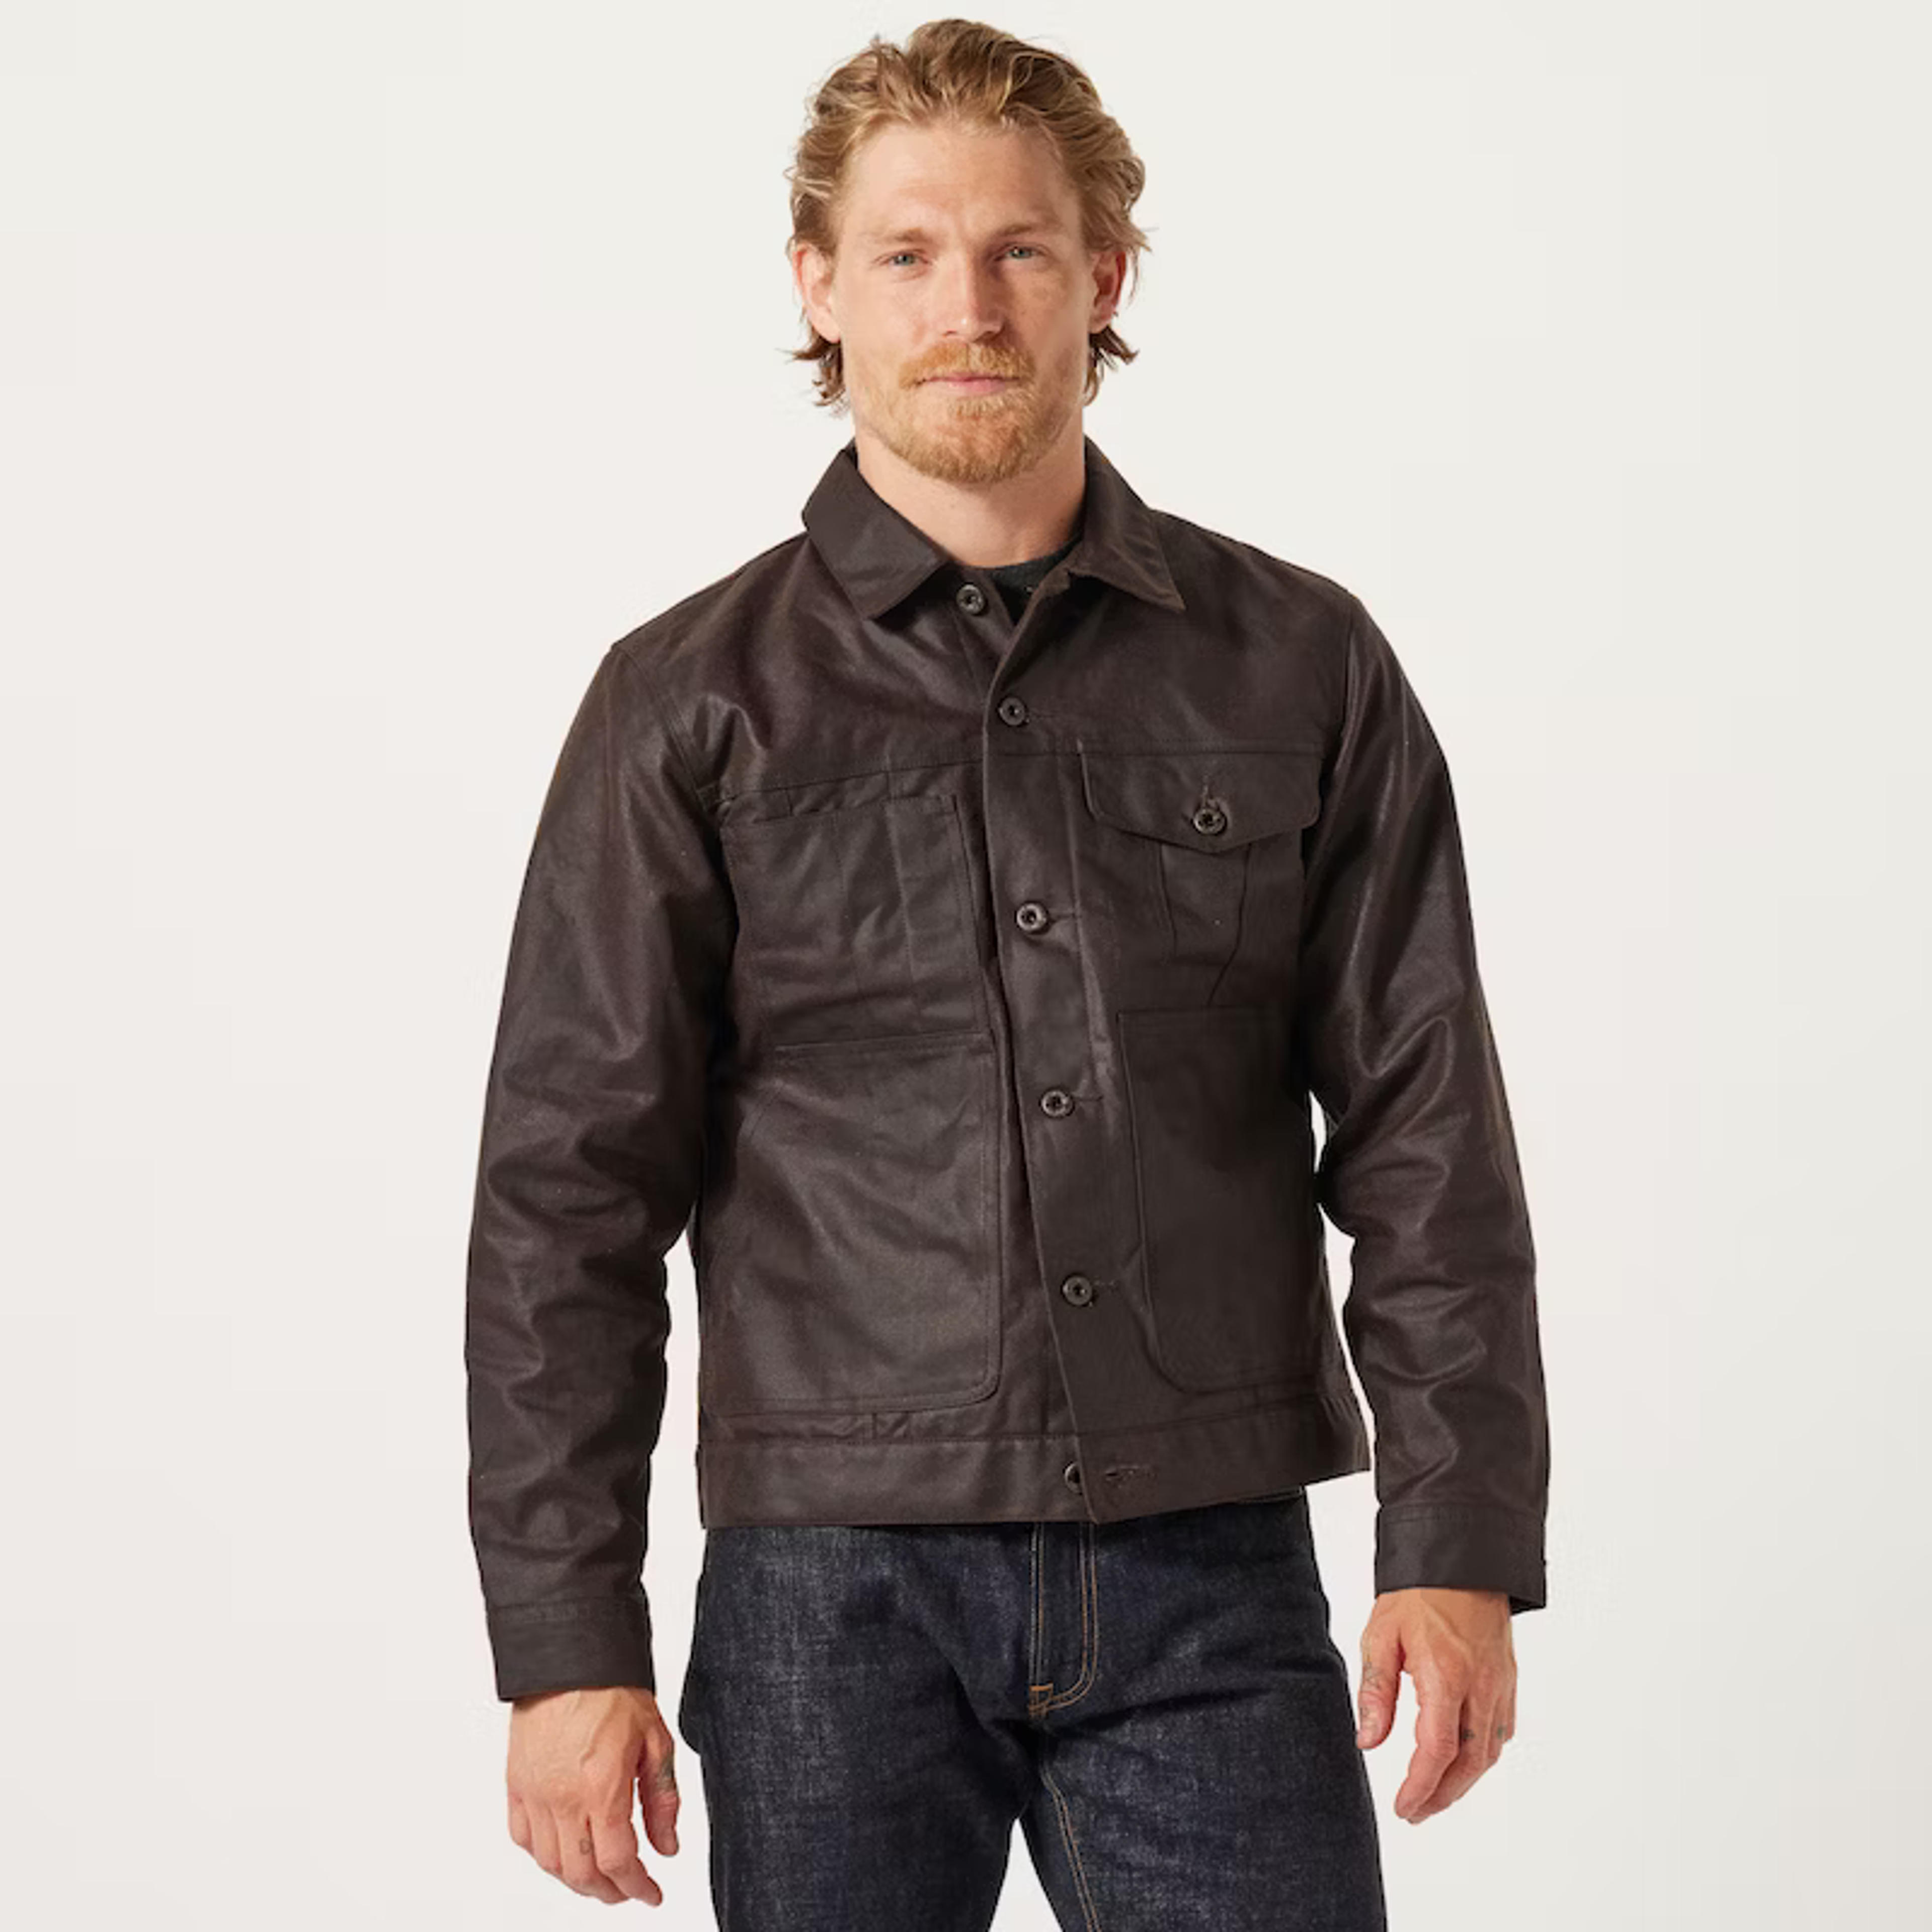 filson.com/outerwear/waxed-jackets/tin-cloth-short-lined-cruiser-jacket.html#sku=20232828-fco-25041833